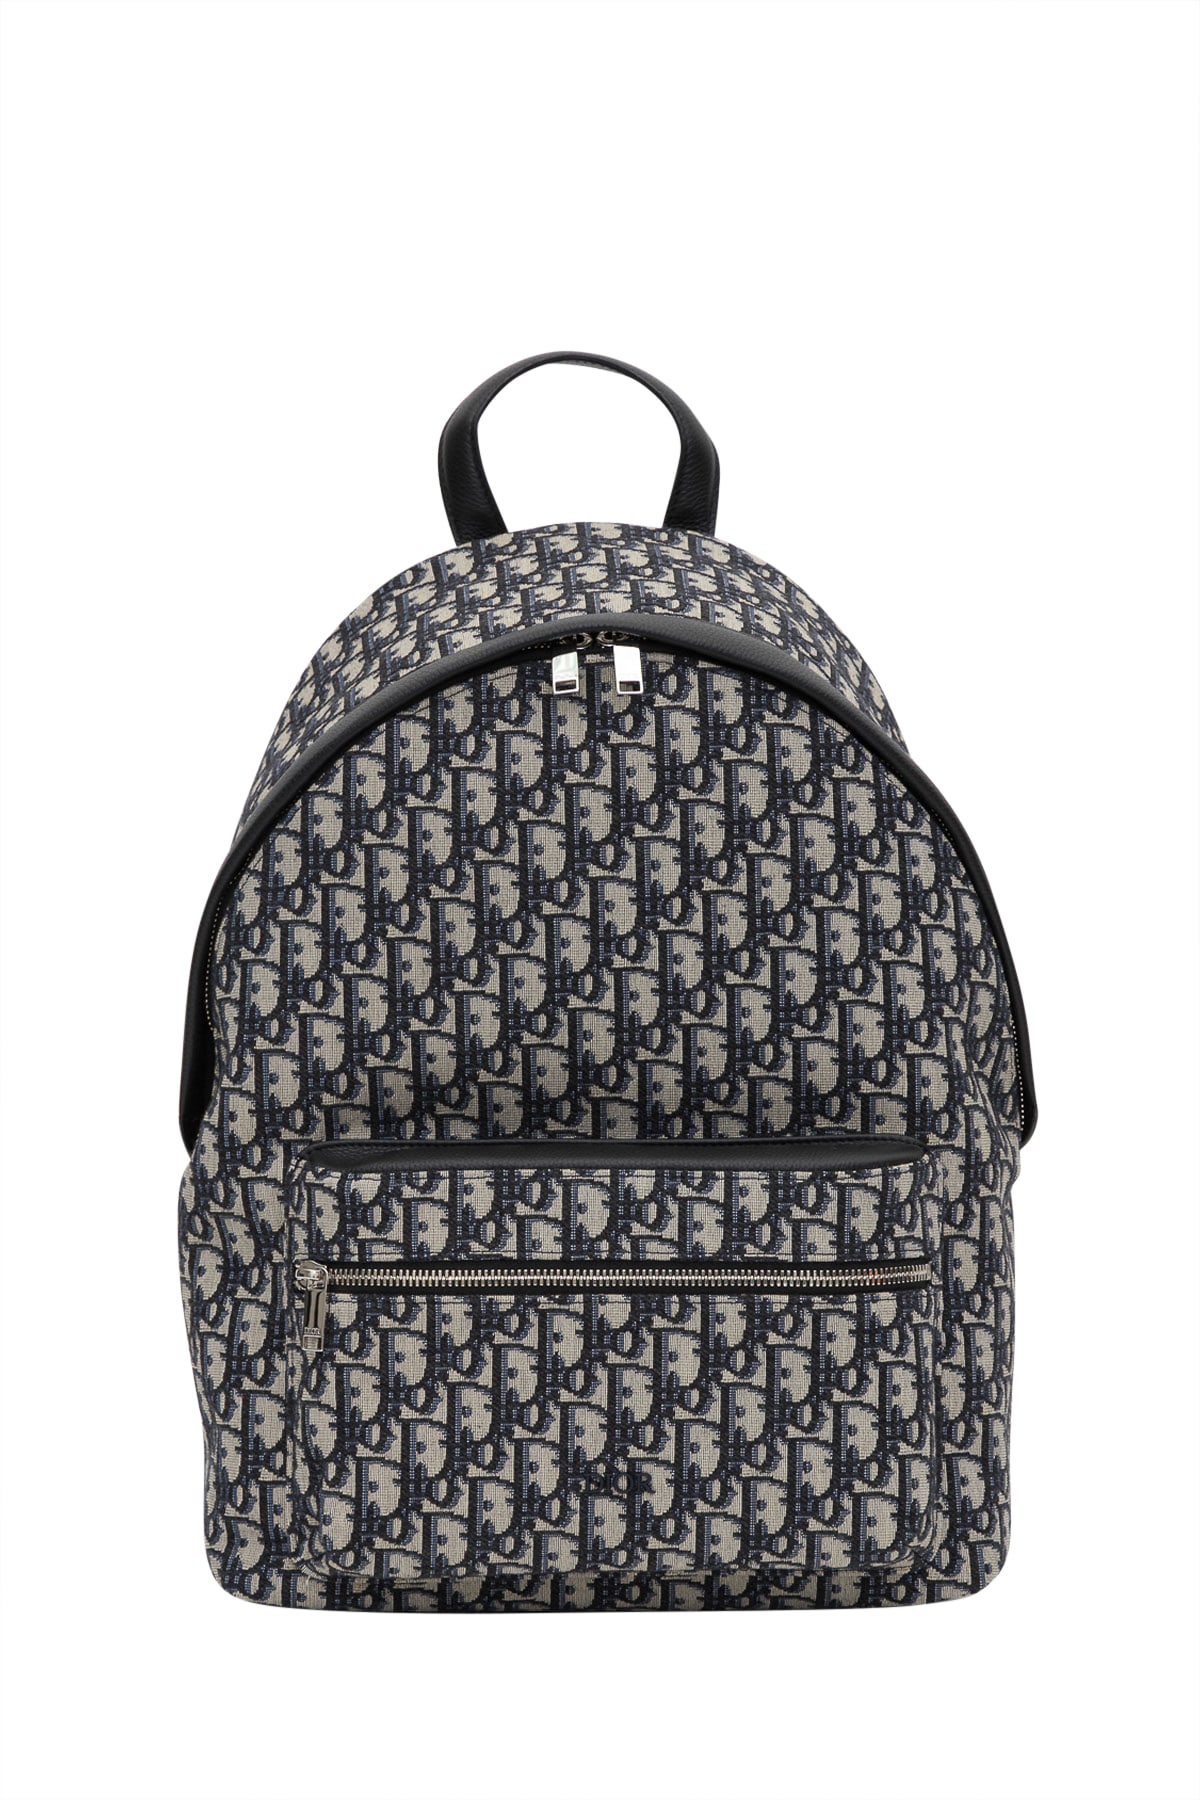 Dior Oblique Backpack In Multicolor | ModeSens